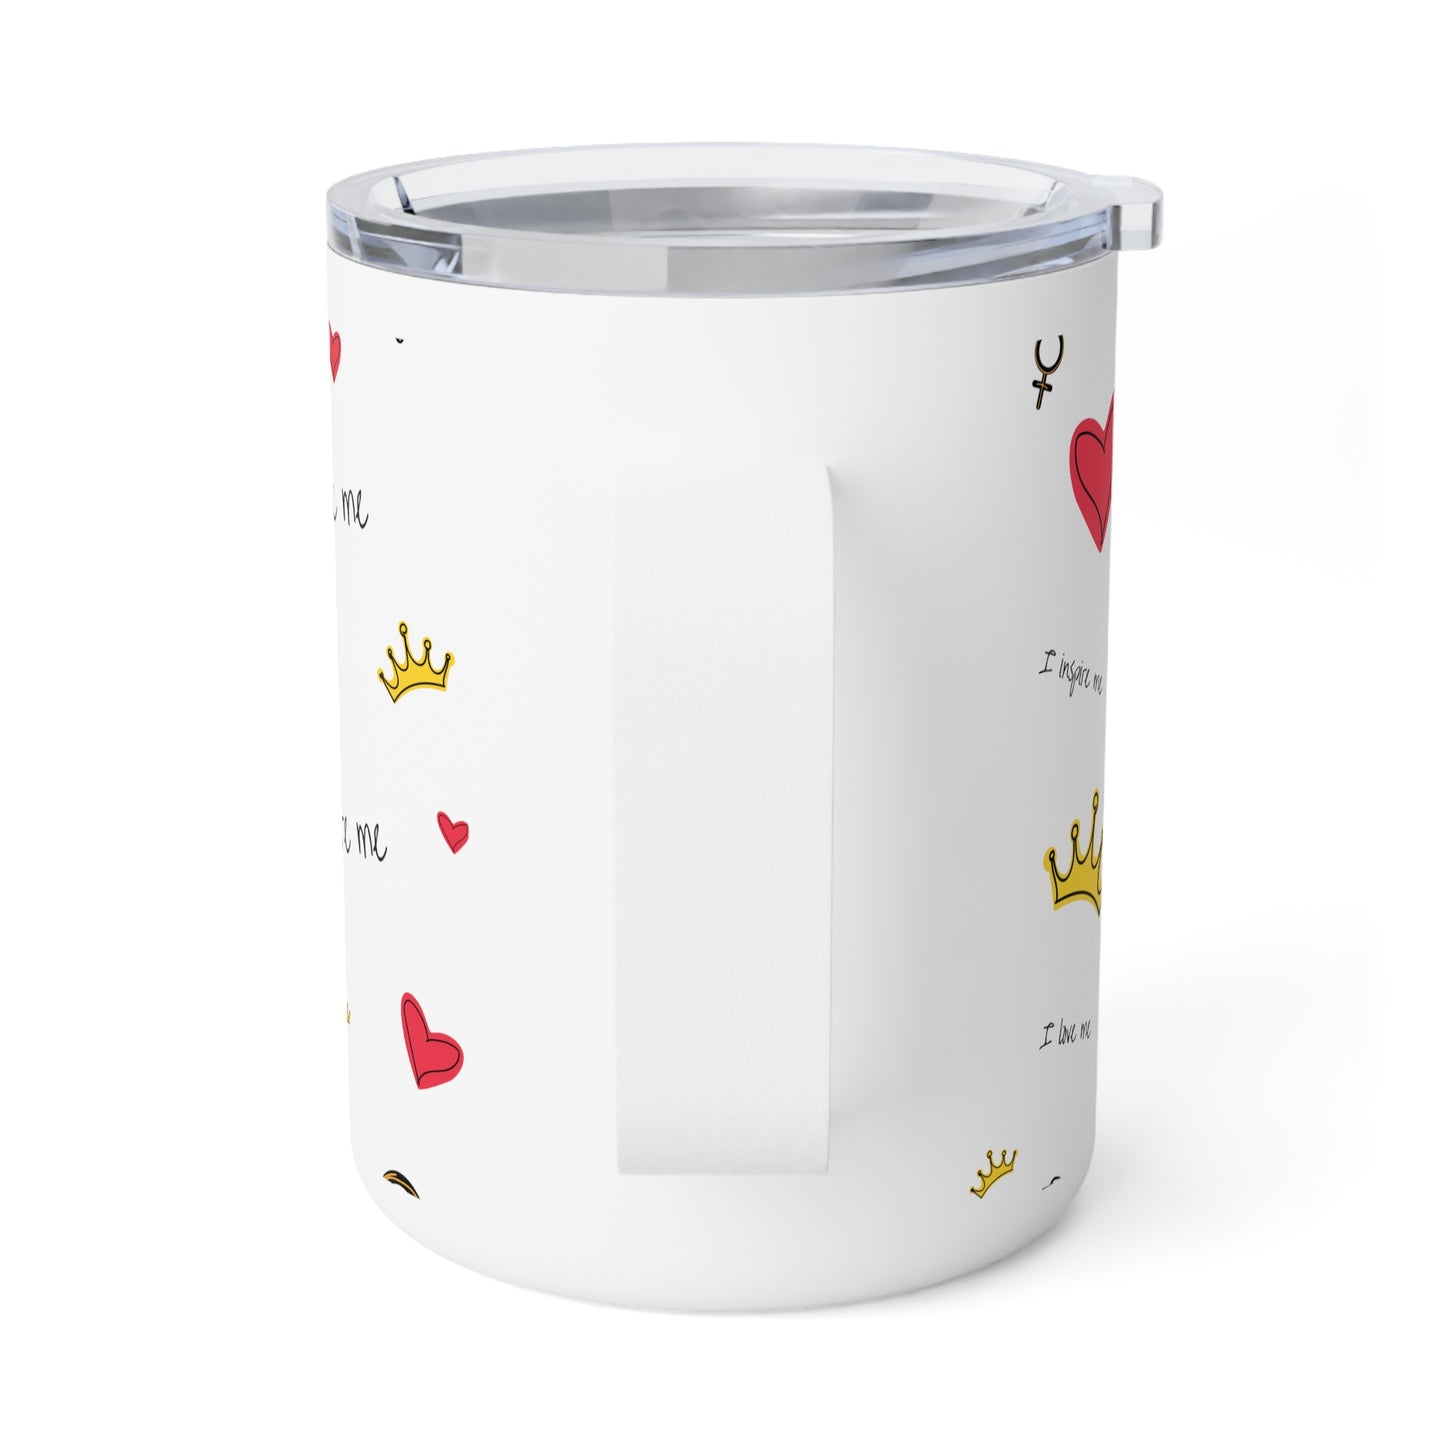 Gurly-Insulated Coffee Mug, 10oz